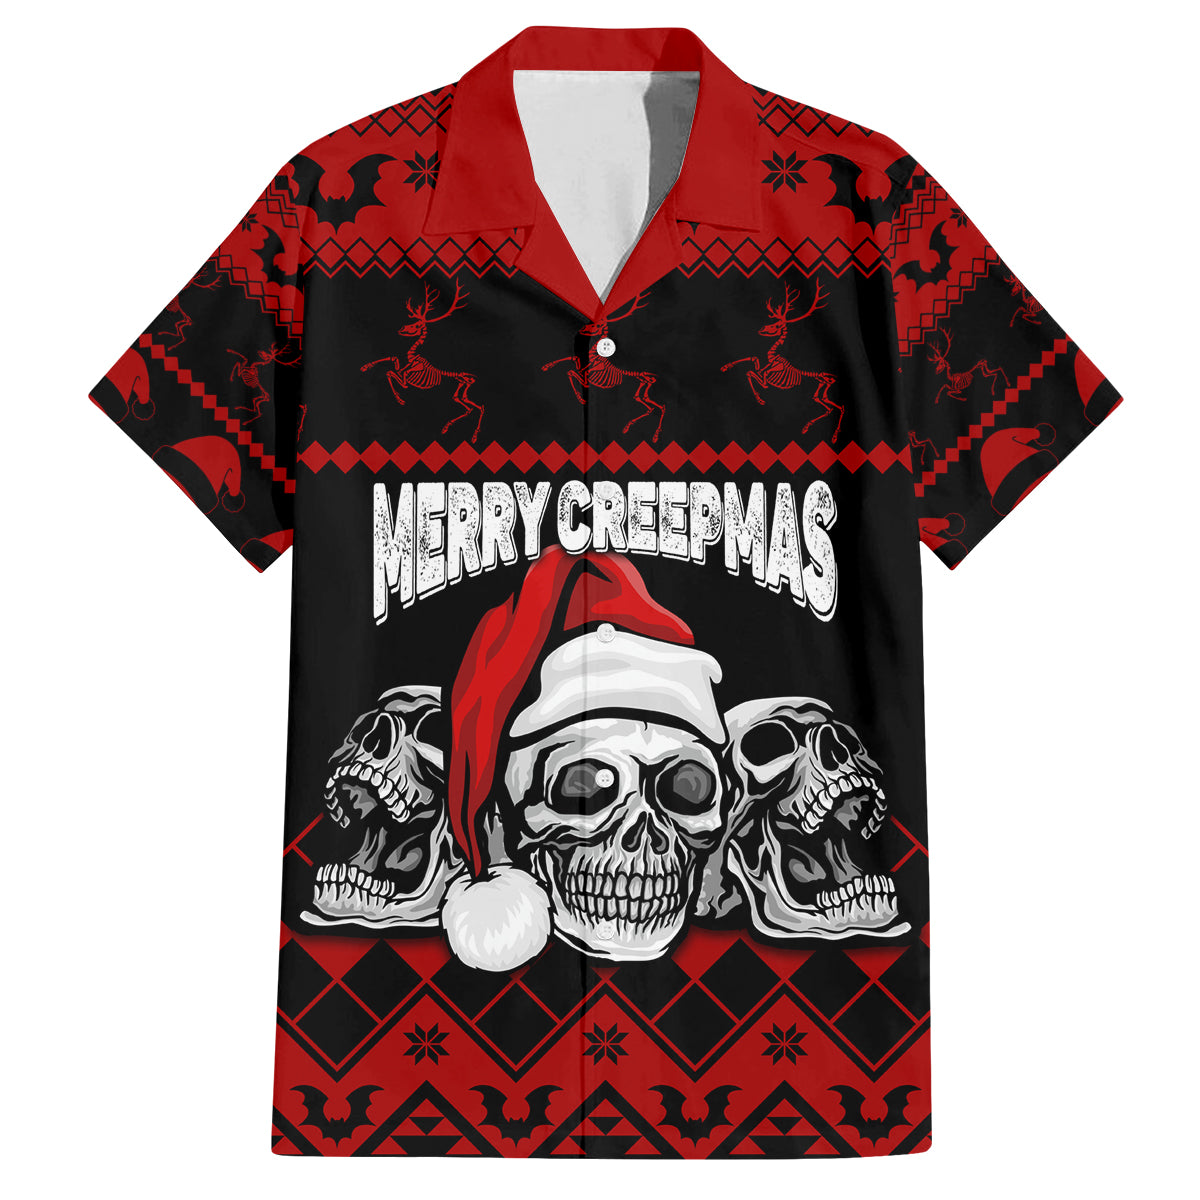 custom-christmas-family-matching-off-shoulder-short-dress-and-hawaiian-shirt-gothic-skull-creepmas